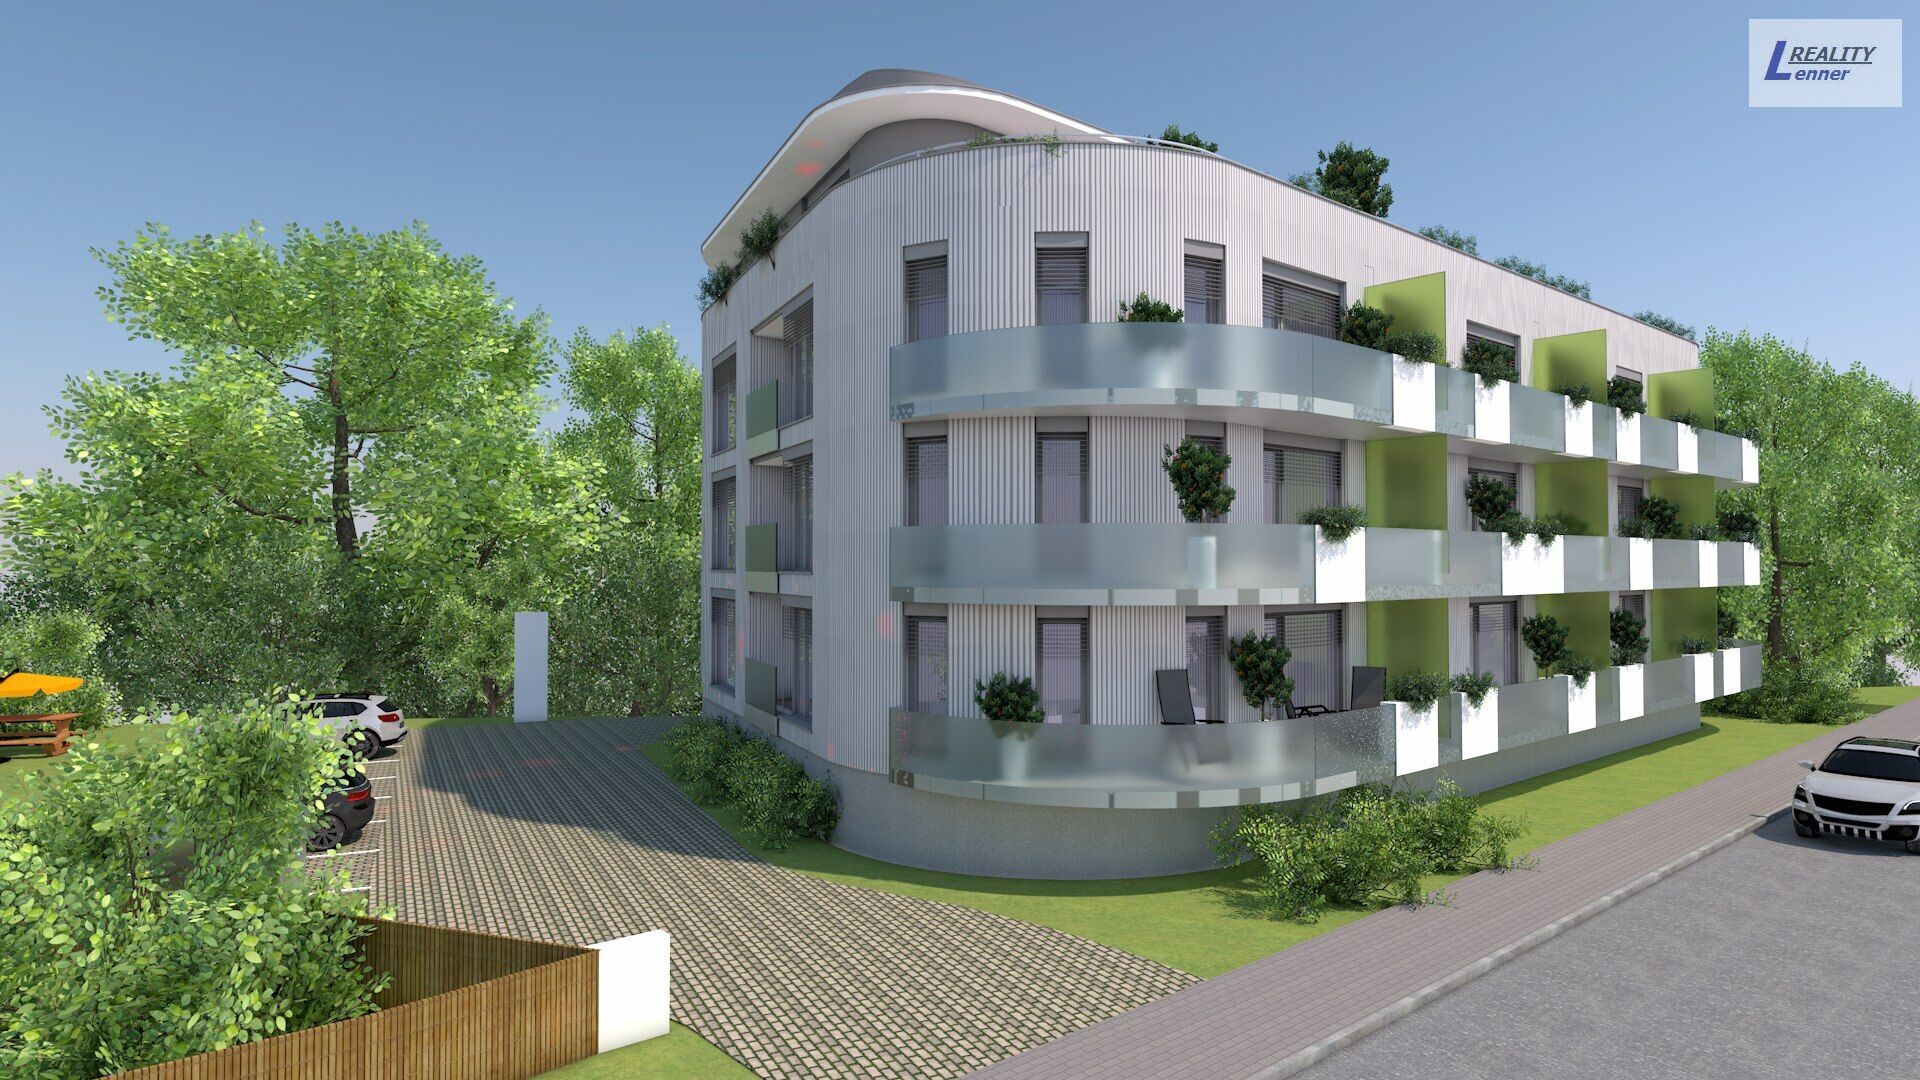 Novostavba bytu 2+kk/ balkon, gar. stání, sklep, 46 m2